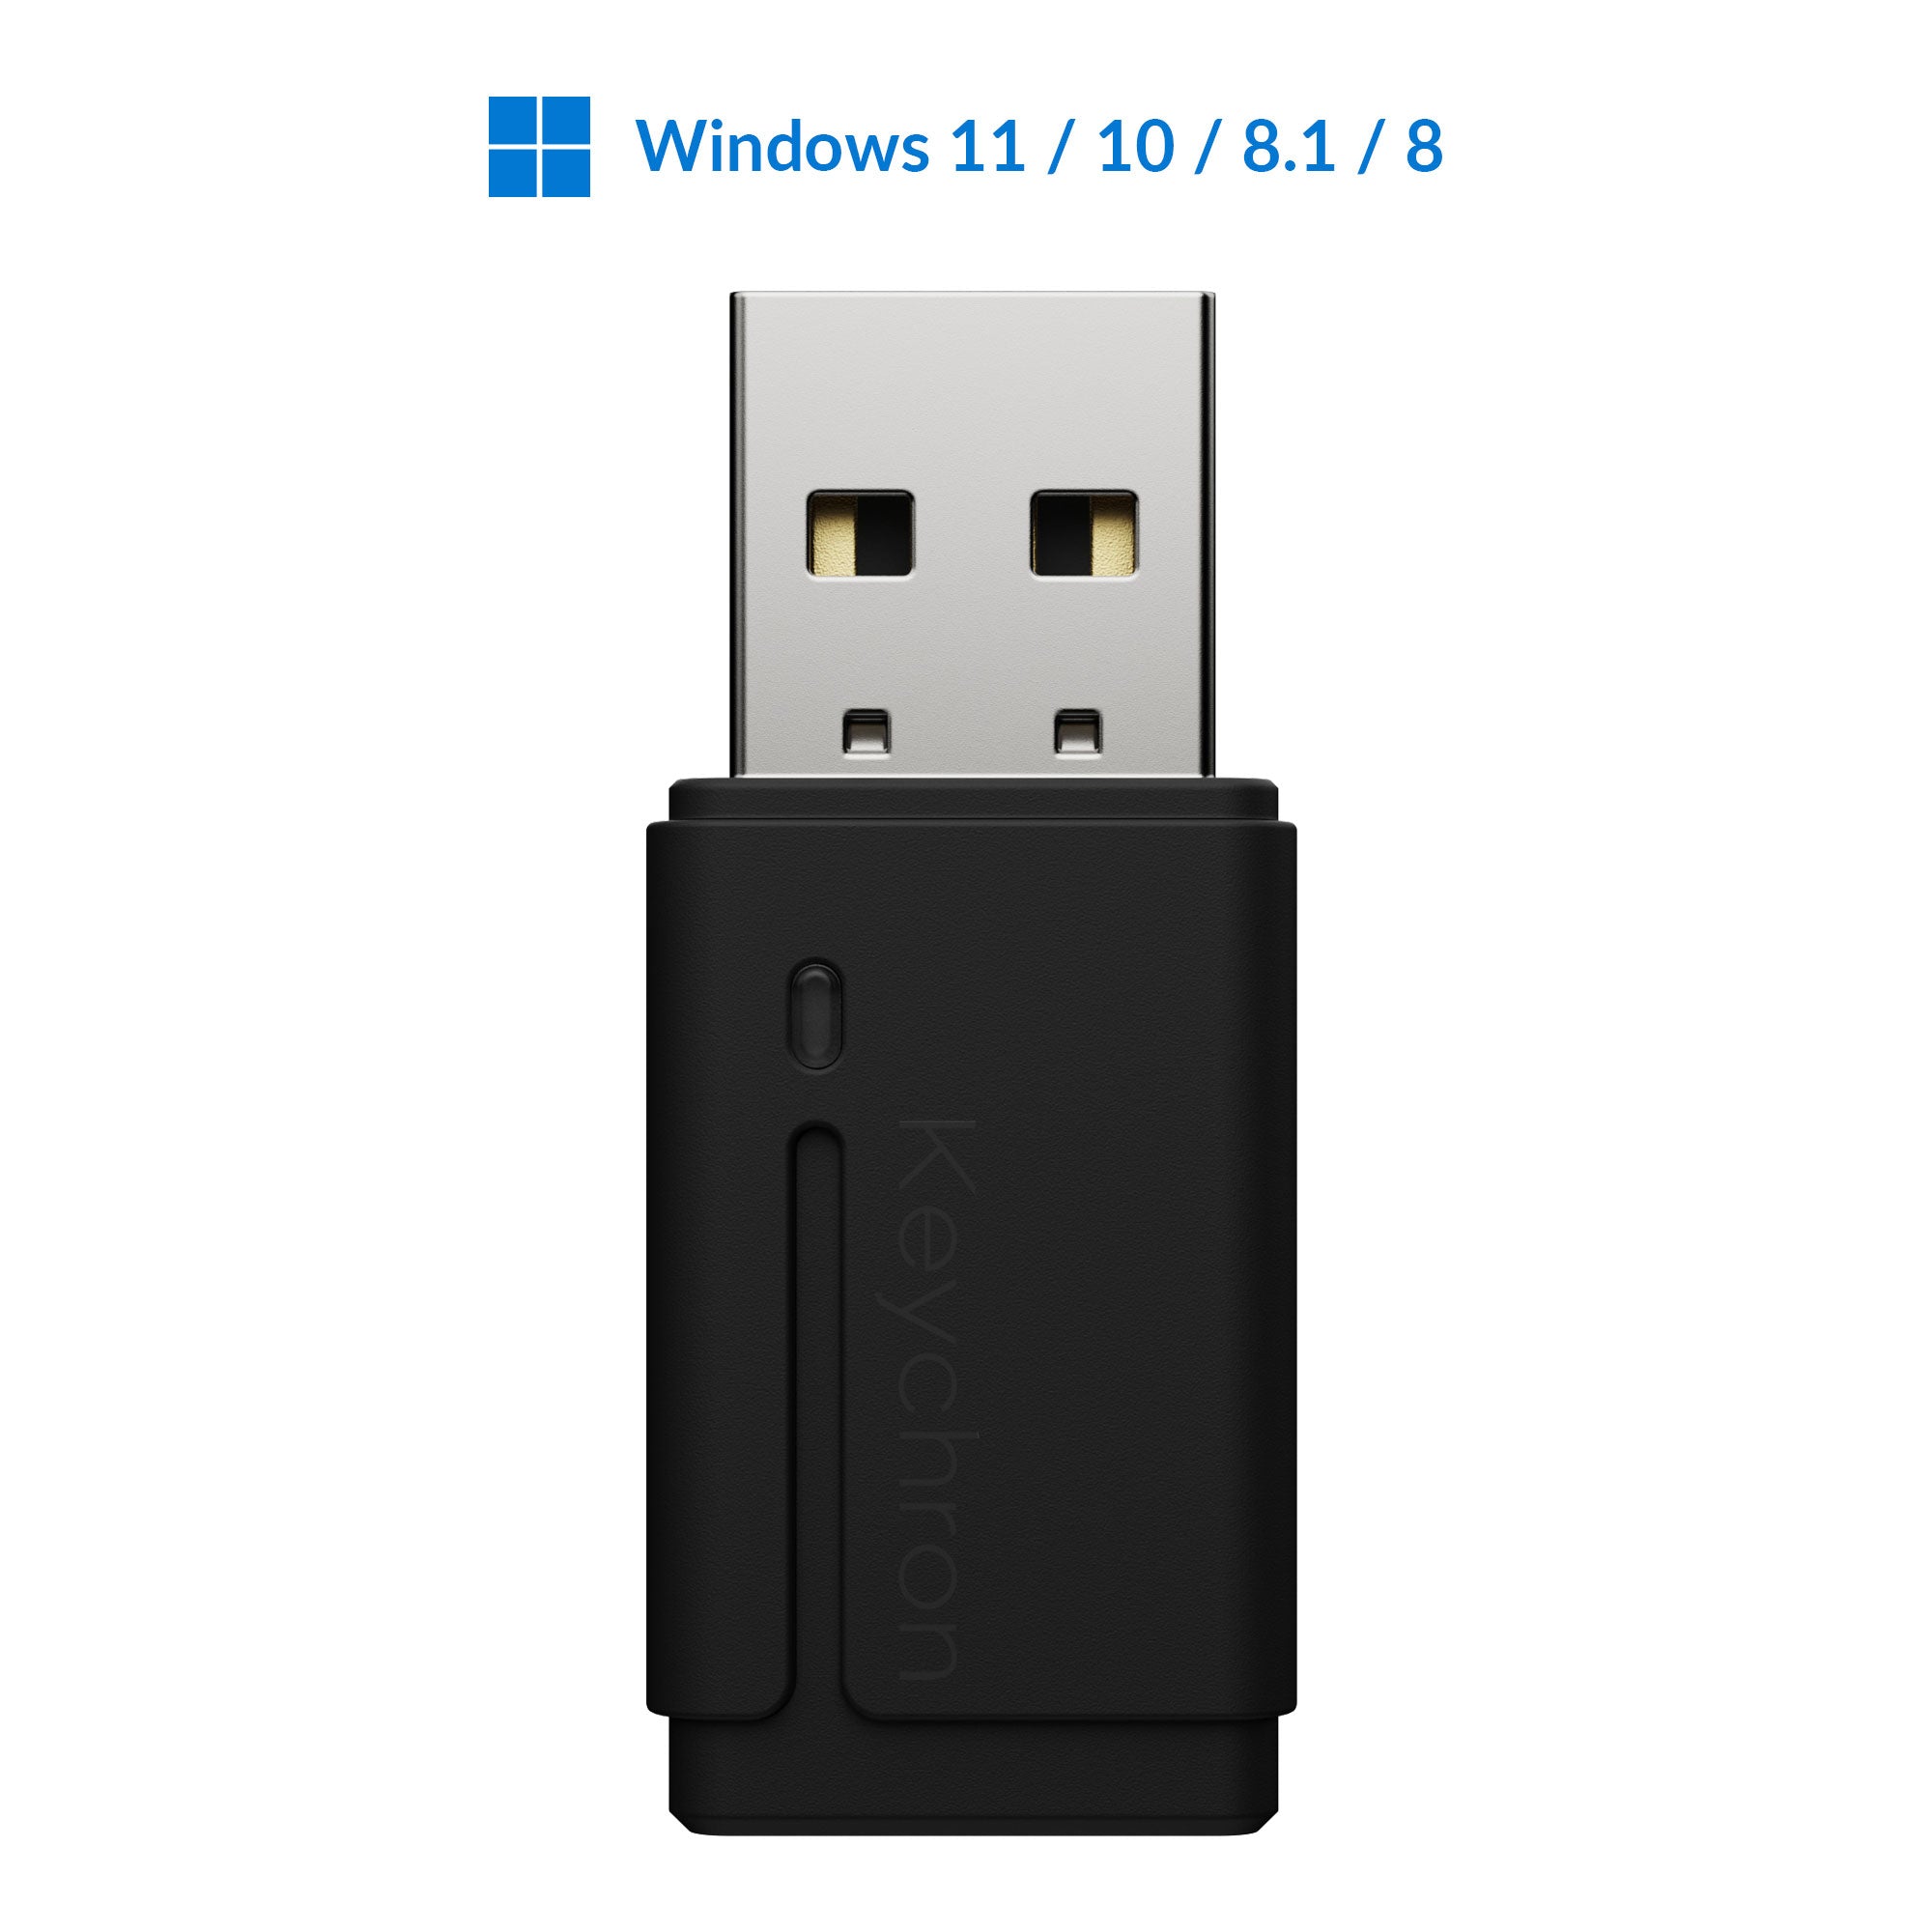 Keychron USB Bluetooth Adapter for Windows PC – Keychron